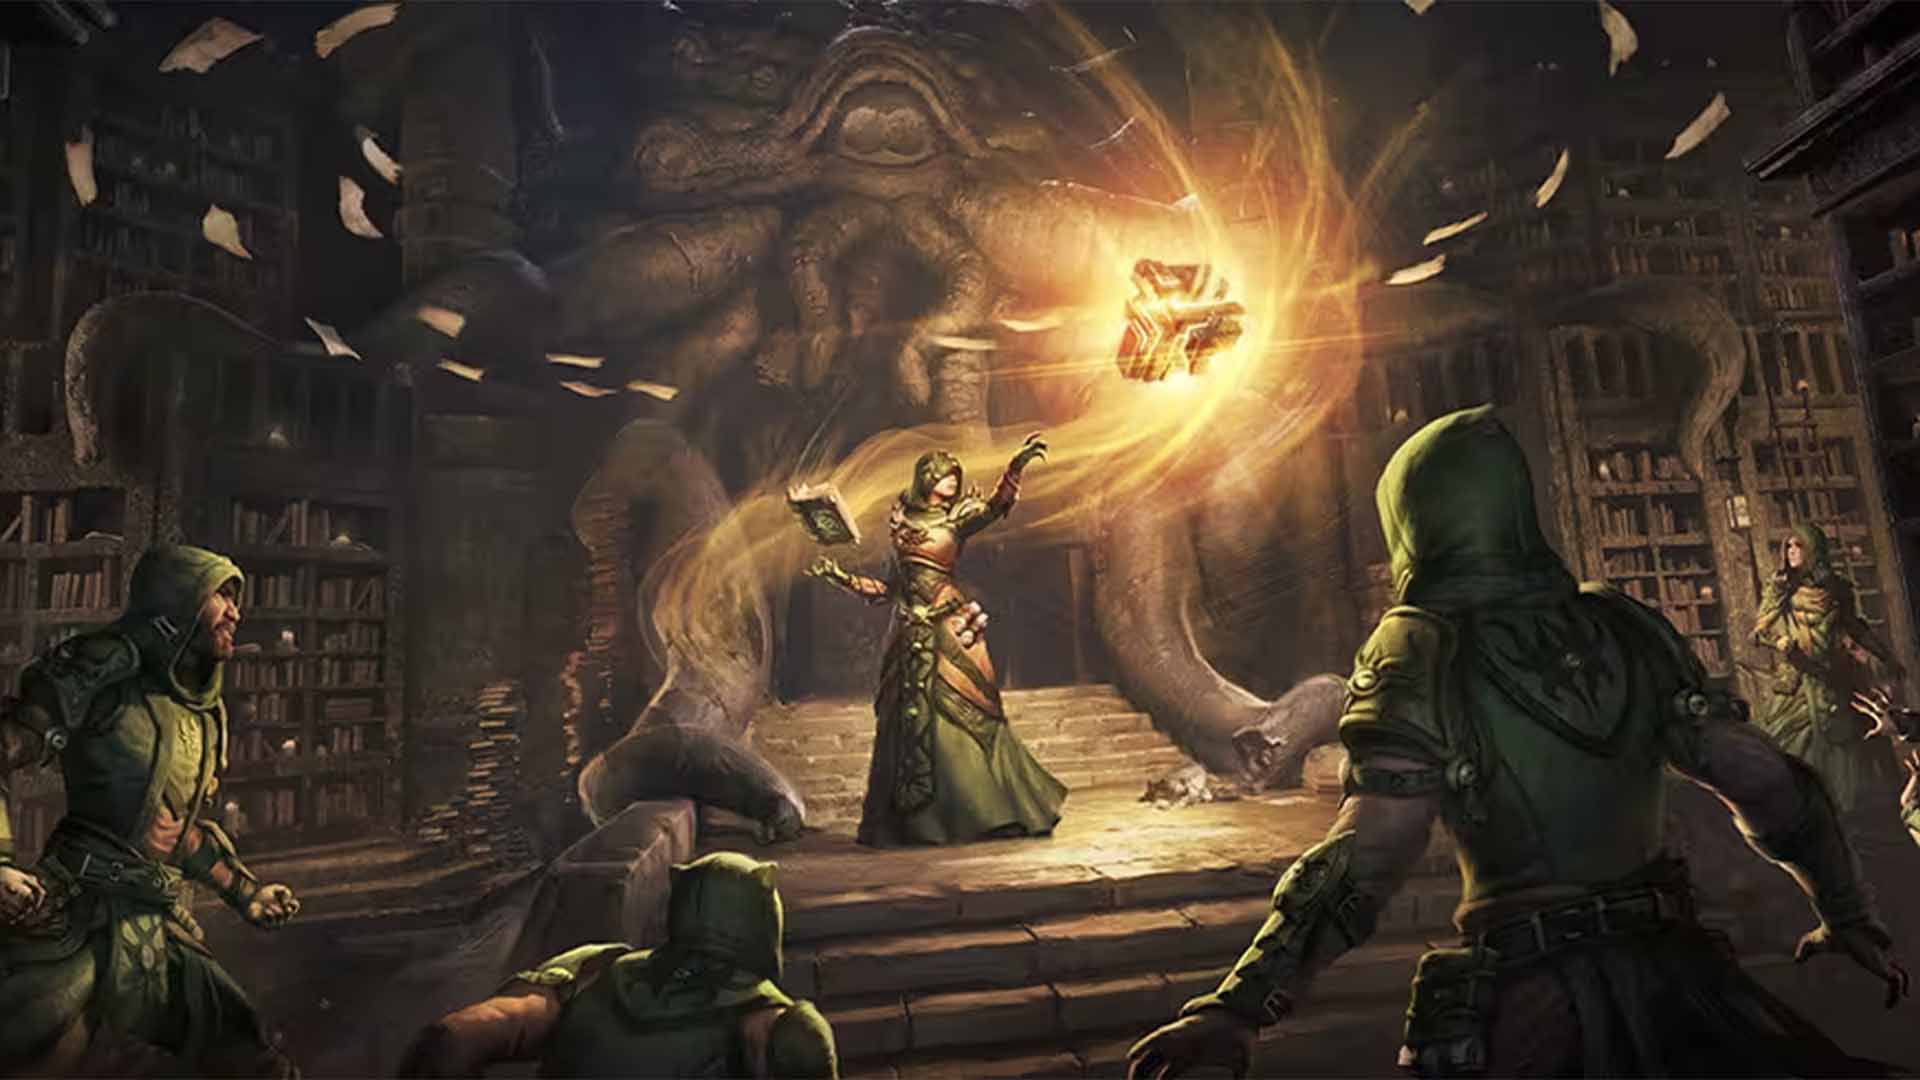 The Elder Scrolls Online – Necrom chapter gameplay revealed –  PlayStation.Blog